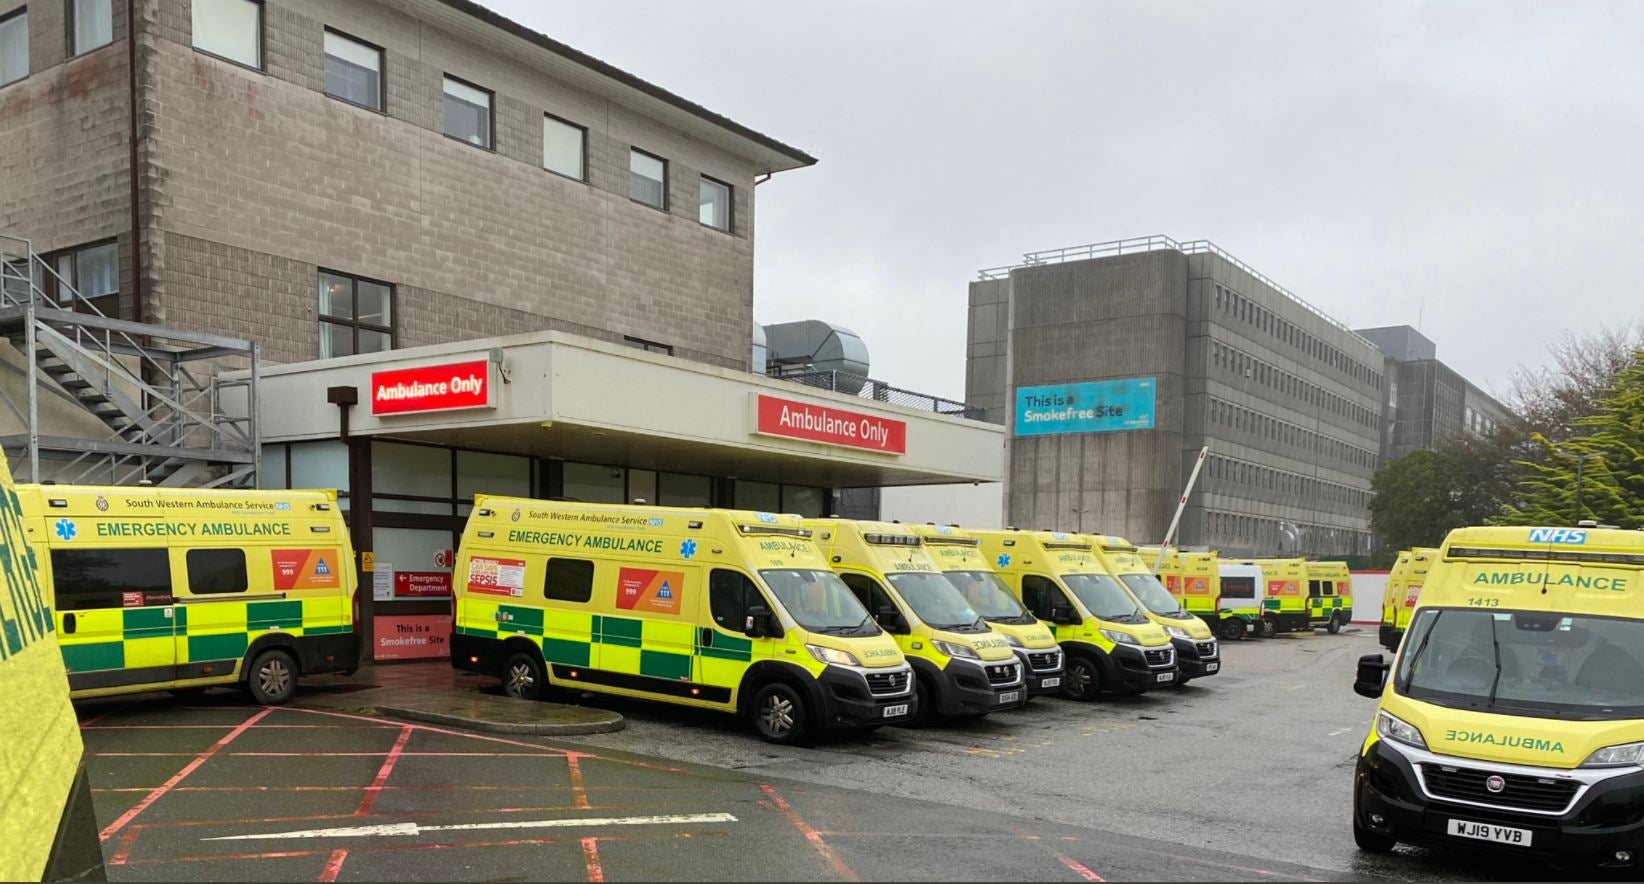 Ambulances queueing to drop off patients at the A&E at Treliske hospital in Truro, Cornwall